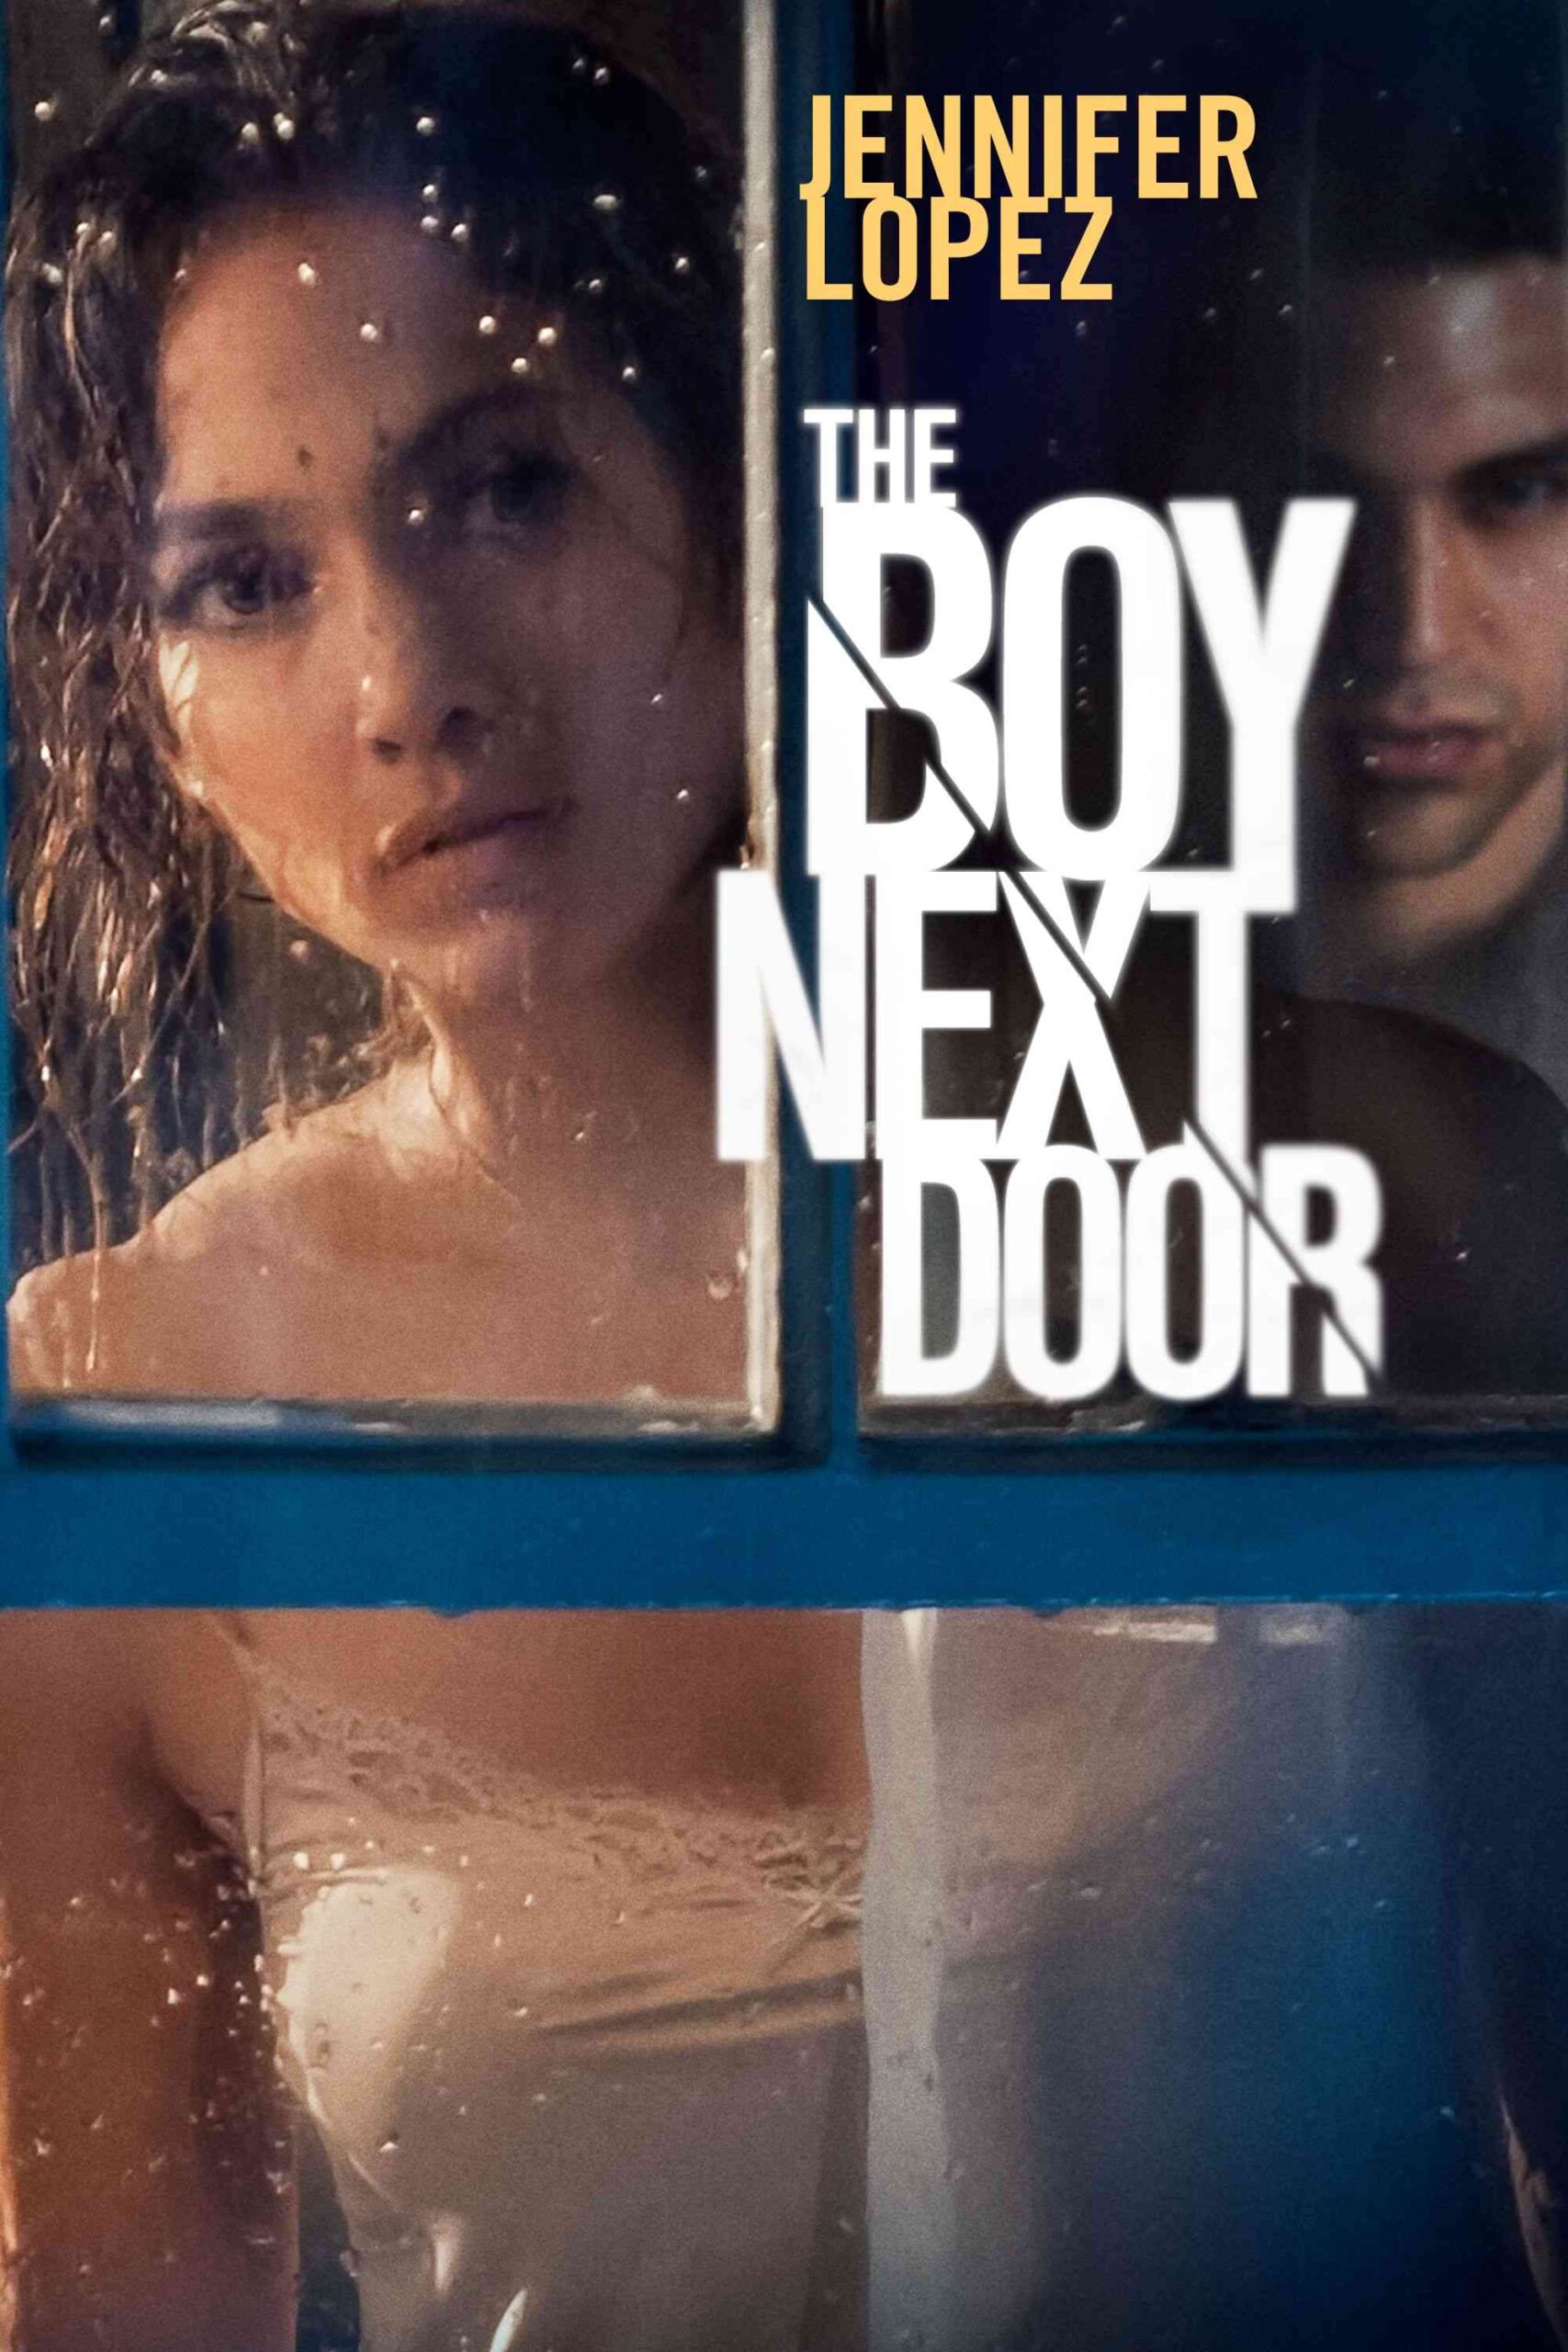 FULL MOVIE: The Boy Next Door (2015) [Romance]